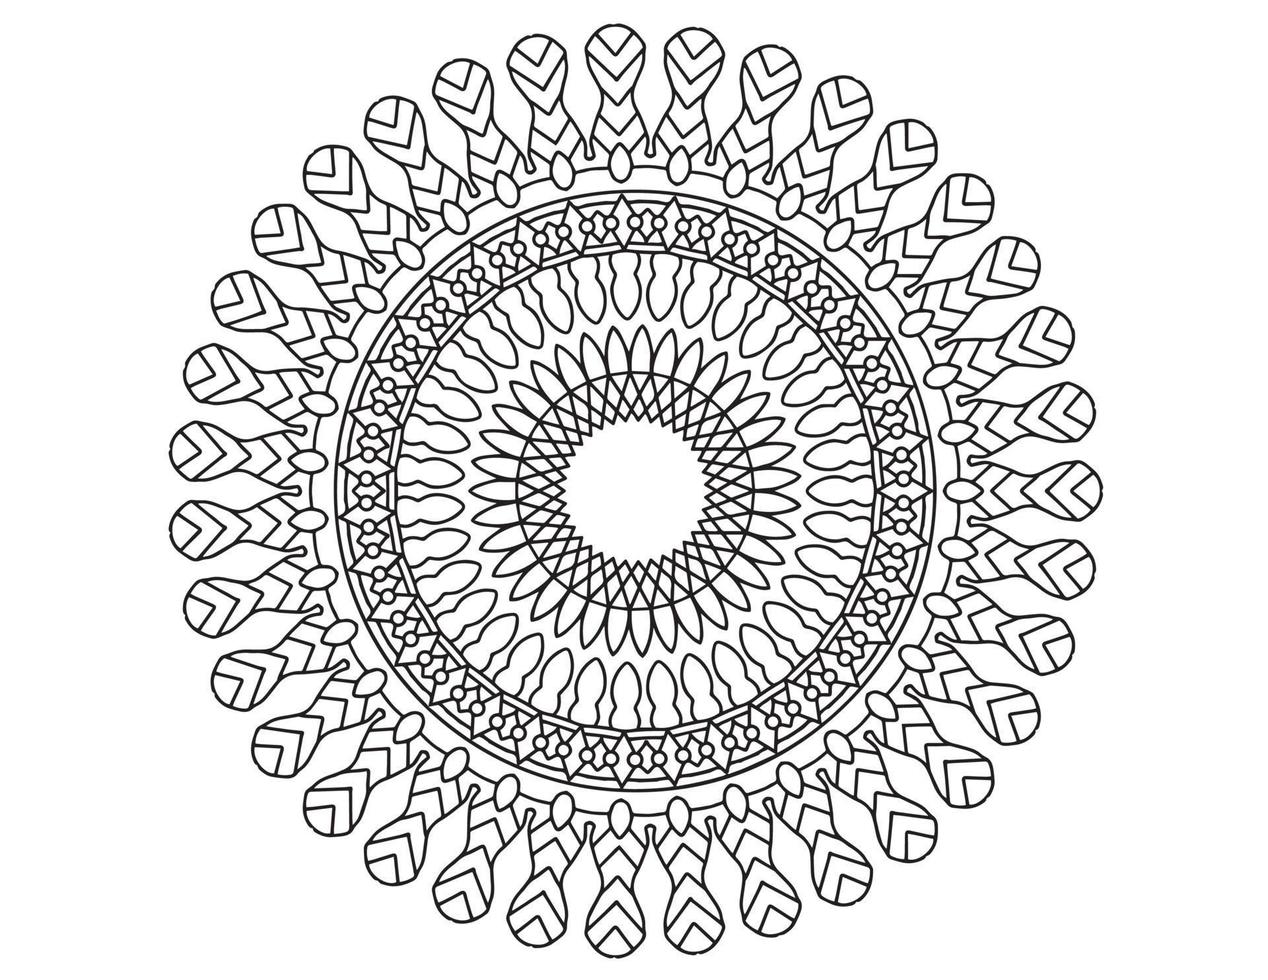 Royal Mandala Design black and white, tattoo, ornaments, traditional, vintage vector